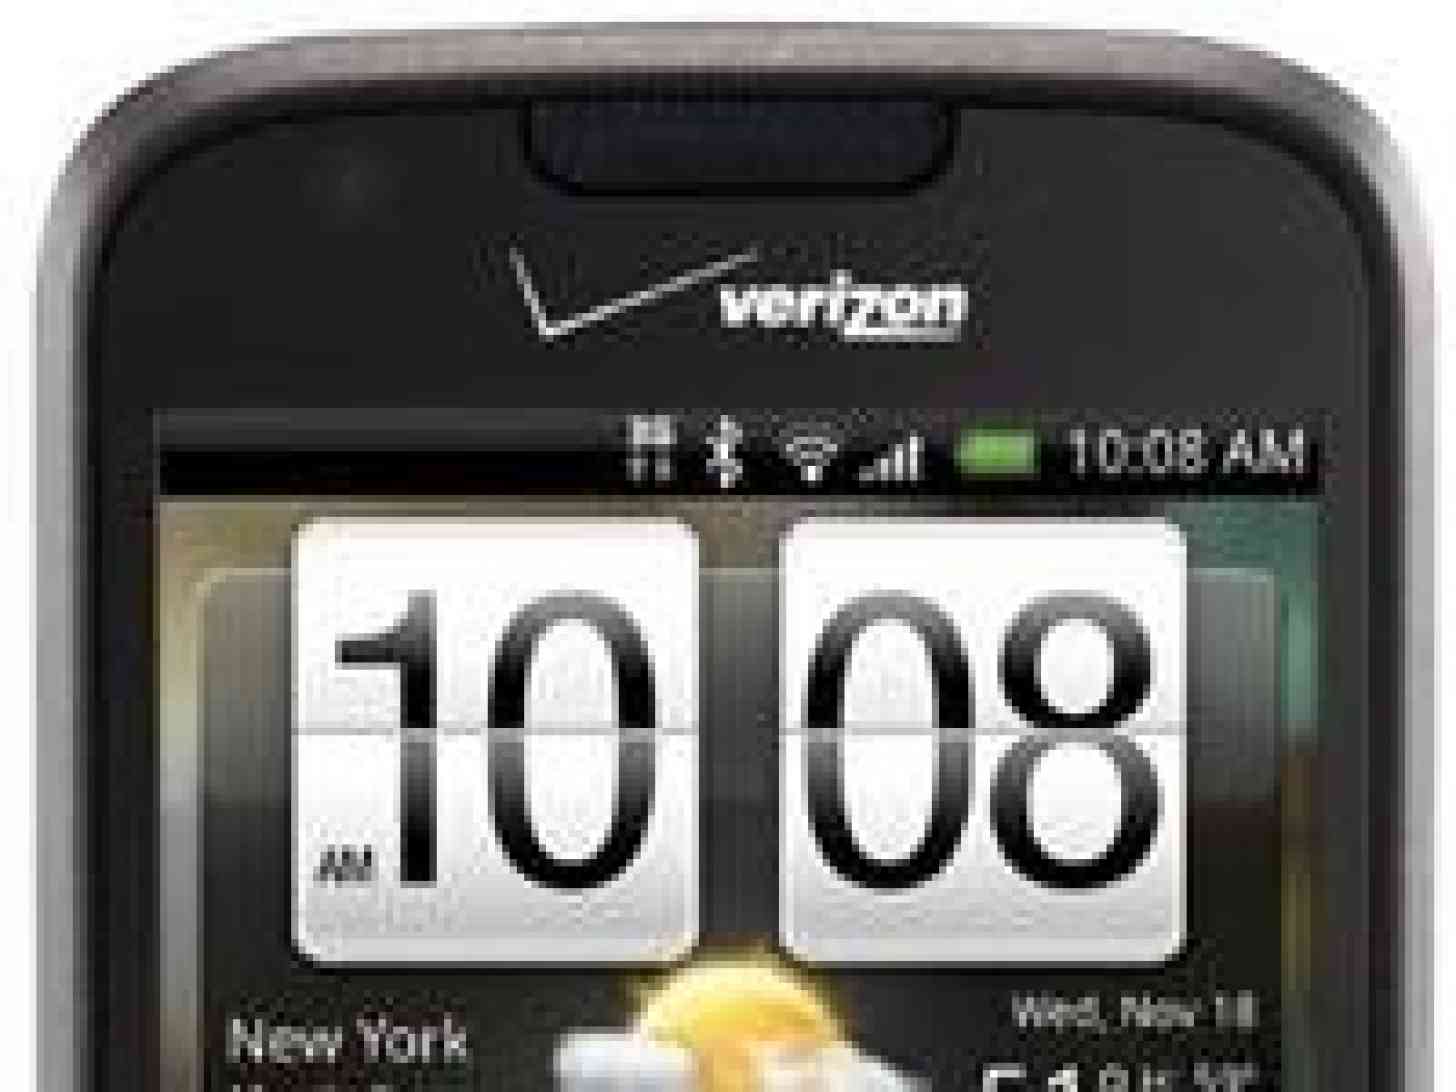 HTC Droid Eris (Verizon Wireless) review: HTC Droid Eris (Verizon